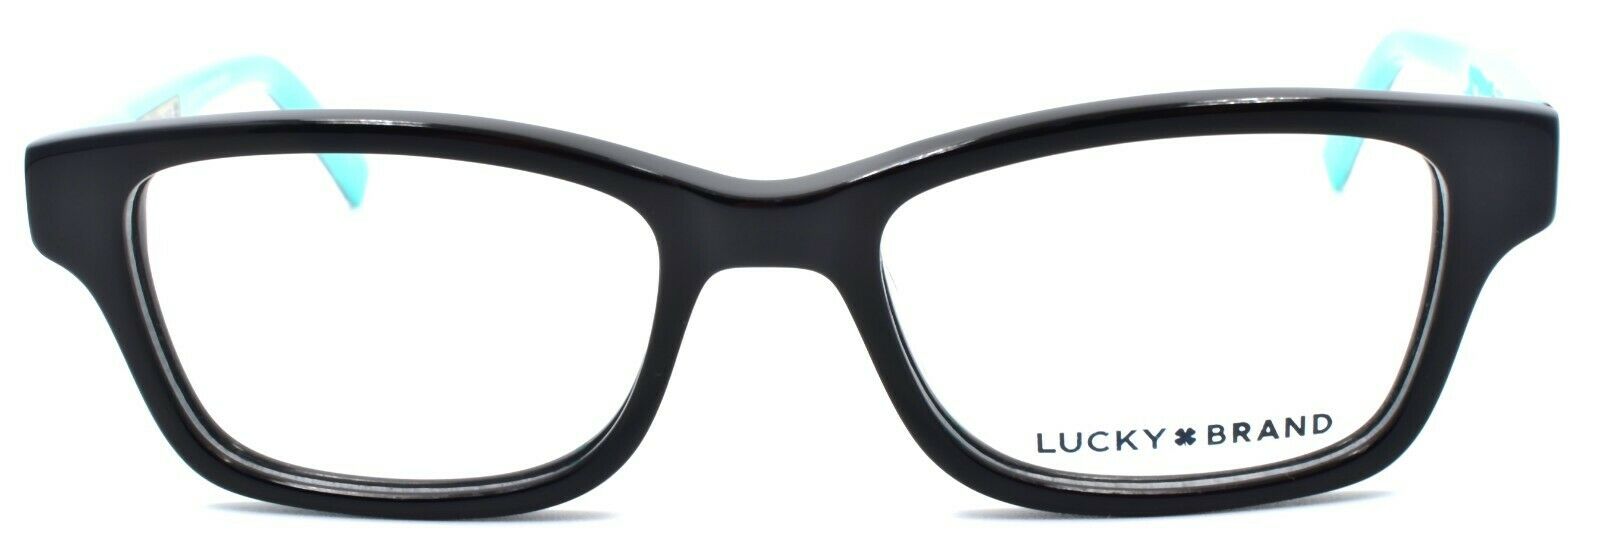 2-LUCKY BRAND D705 Kids Eyeglasses Frames 46-16-125 Black-751286295634-IKSpecs